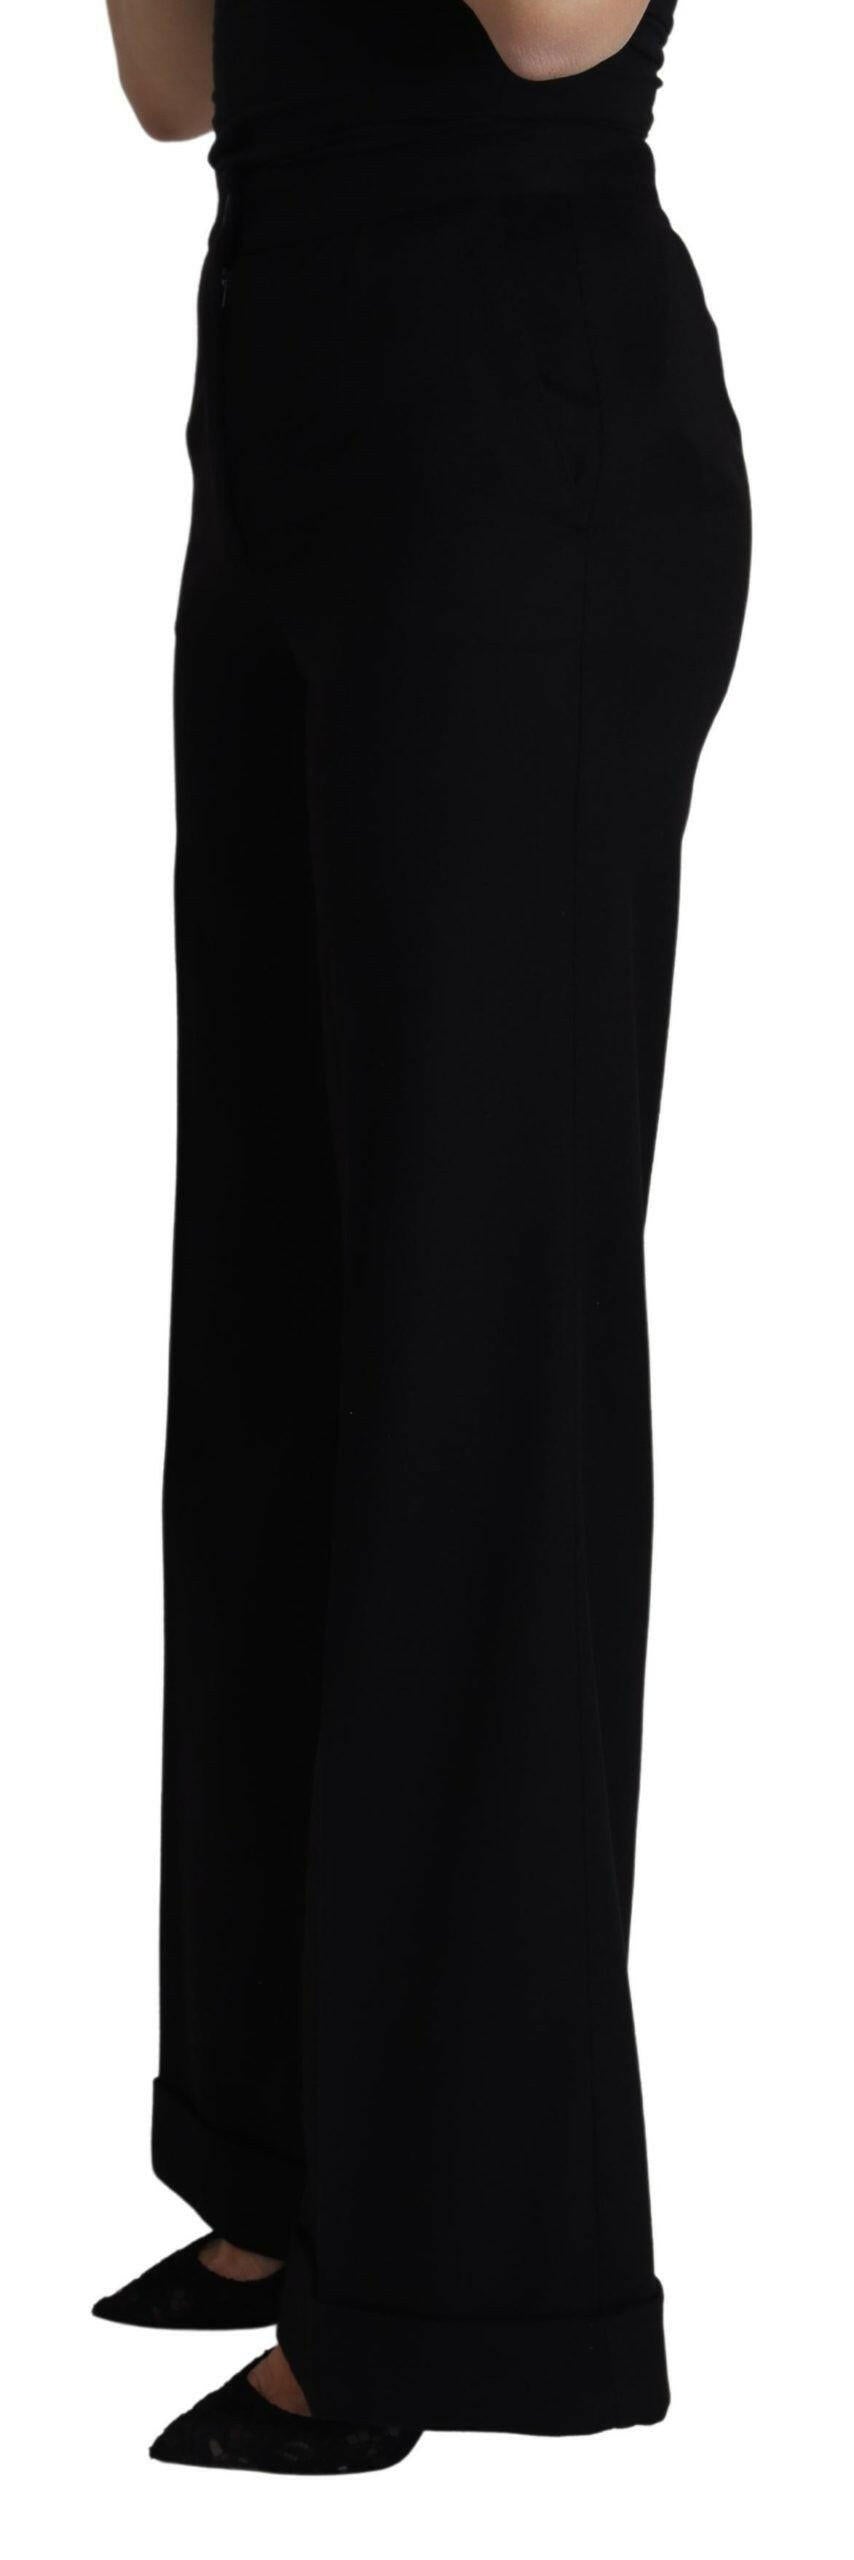 Dolce & Gabbana Black Cashmere Wide Leg Women Trouser Pants - GENUINE AUTHENTIC BRAND LLC  